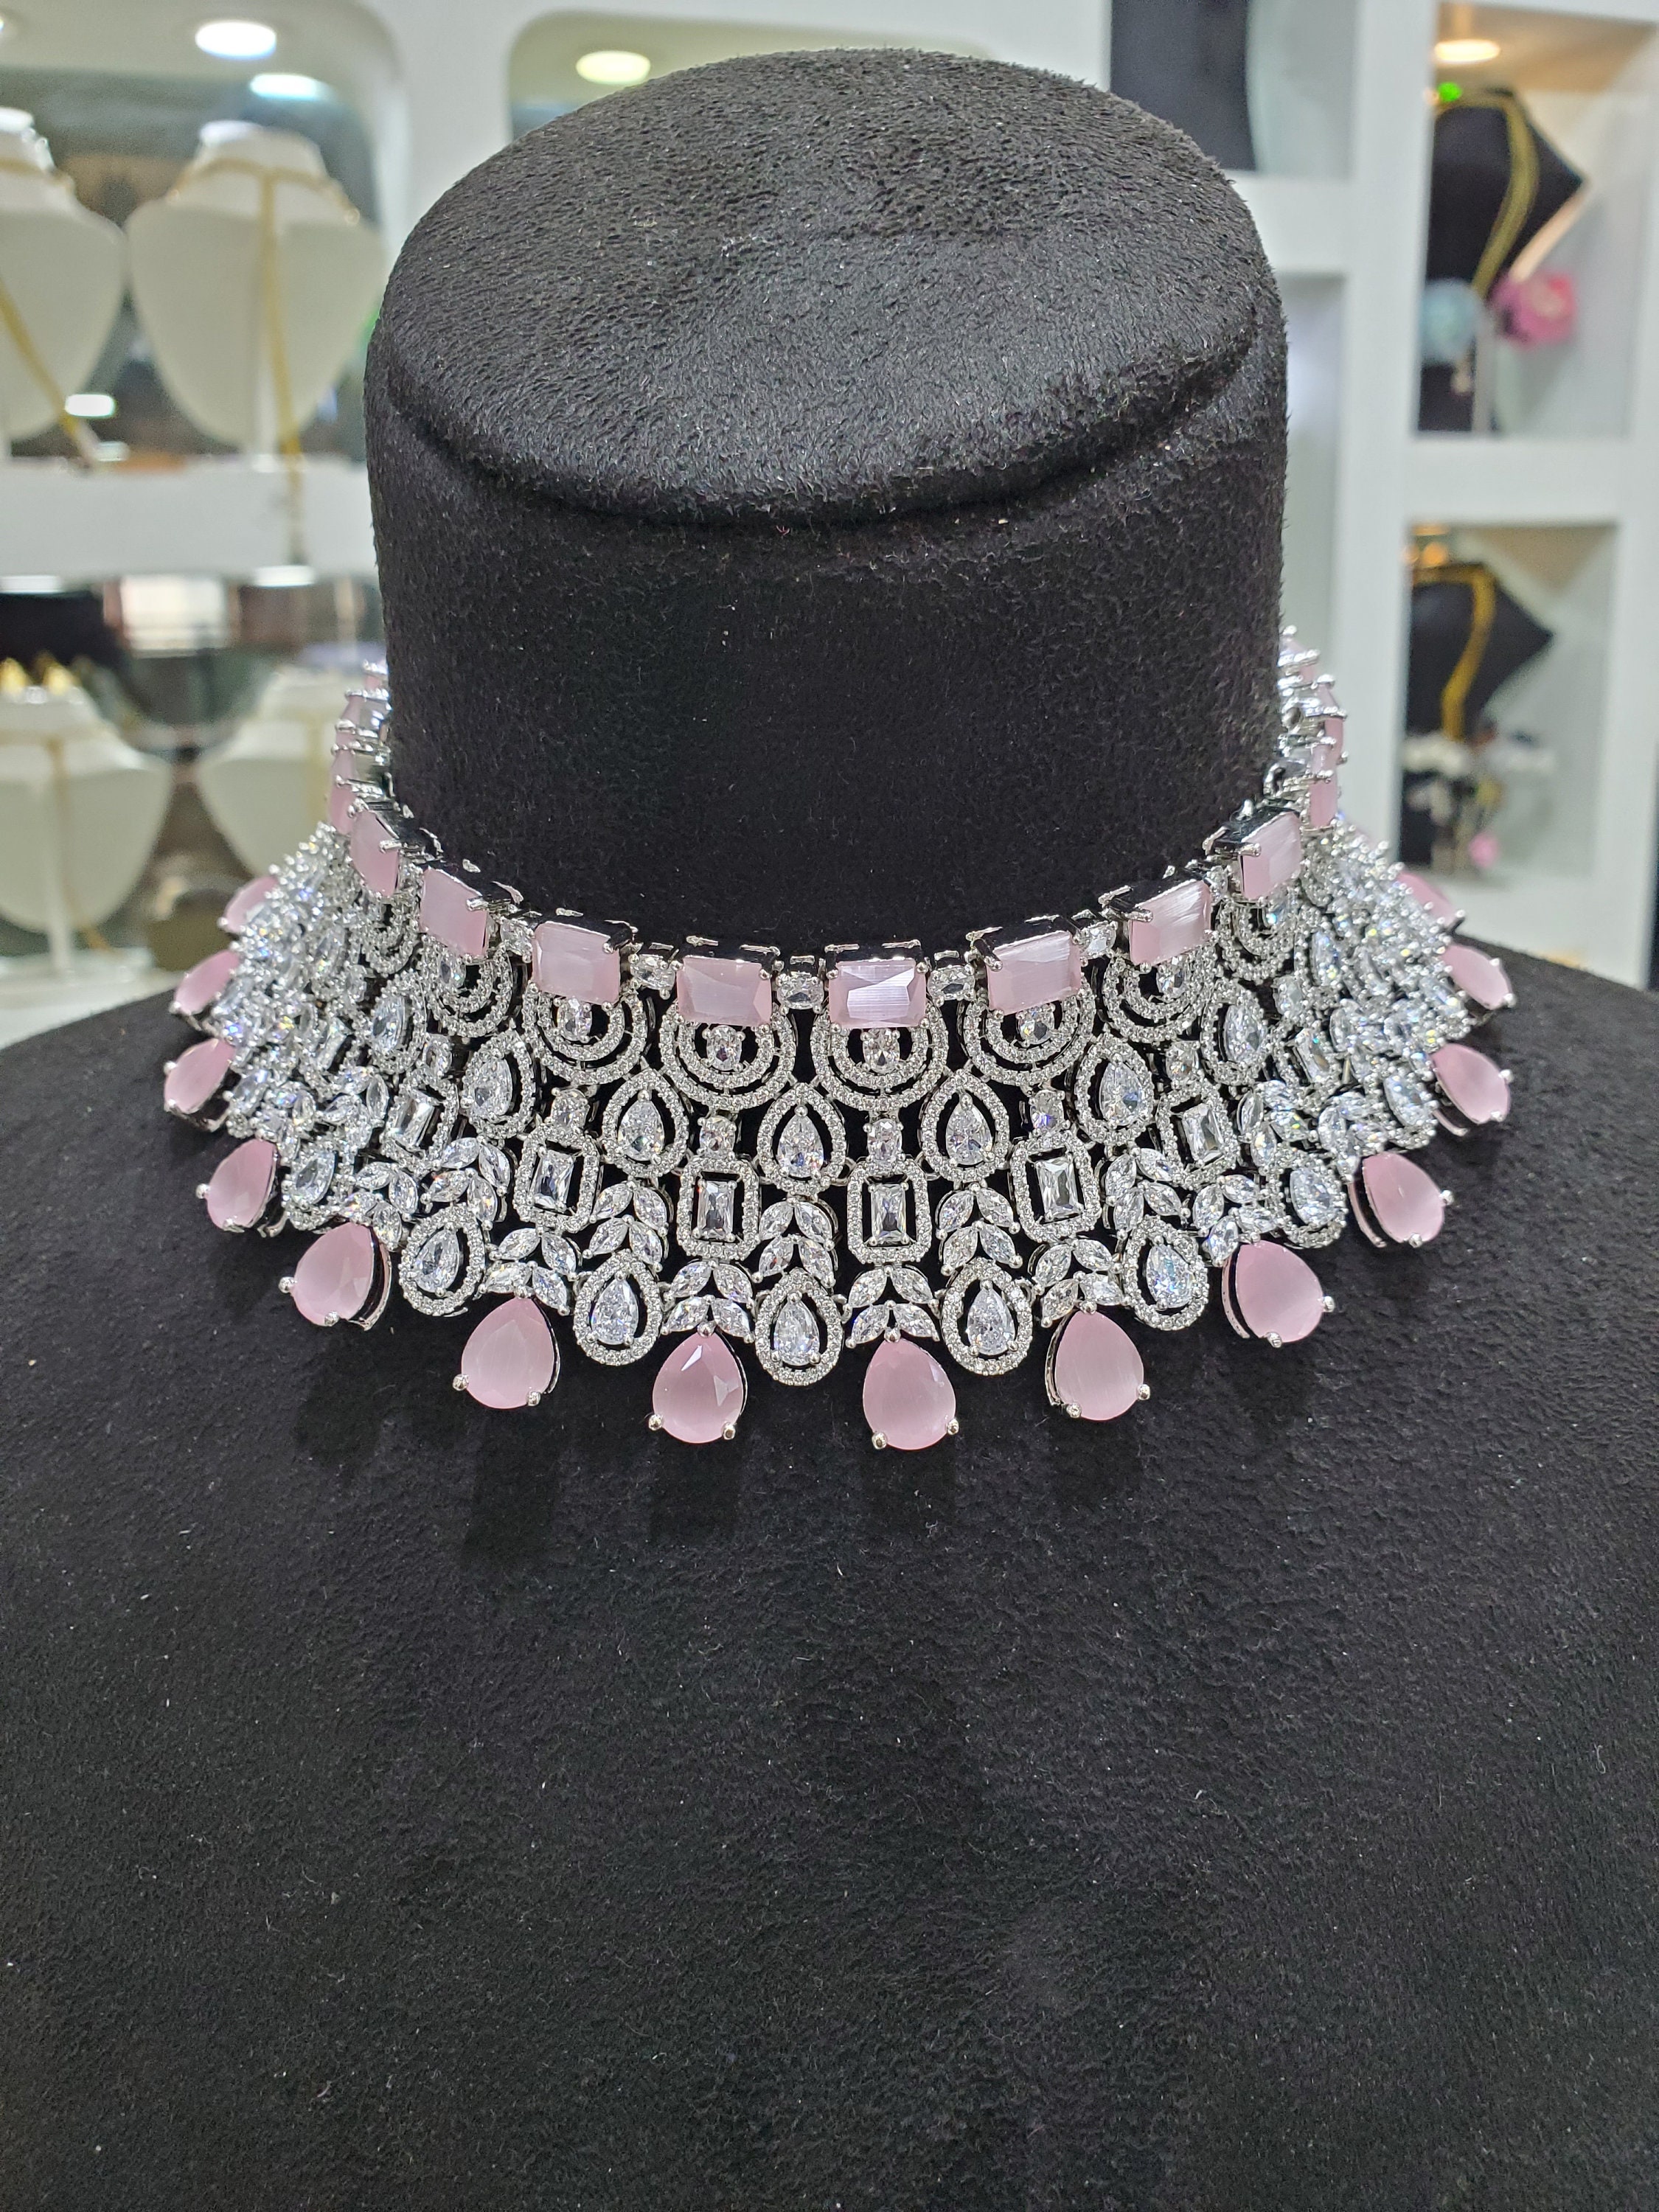 KhwaishJewellery Pink Stones Diamond CZ Choker Necklace/Earrings and Tikka,Bridal CZ Jewelry,Cubic Zirconia necklace,CZ Choker,Diamond Jewelry, Wedding Set